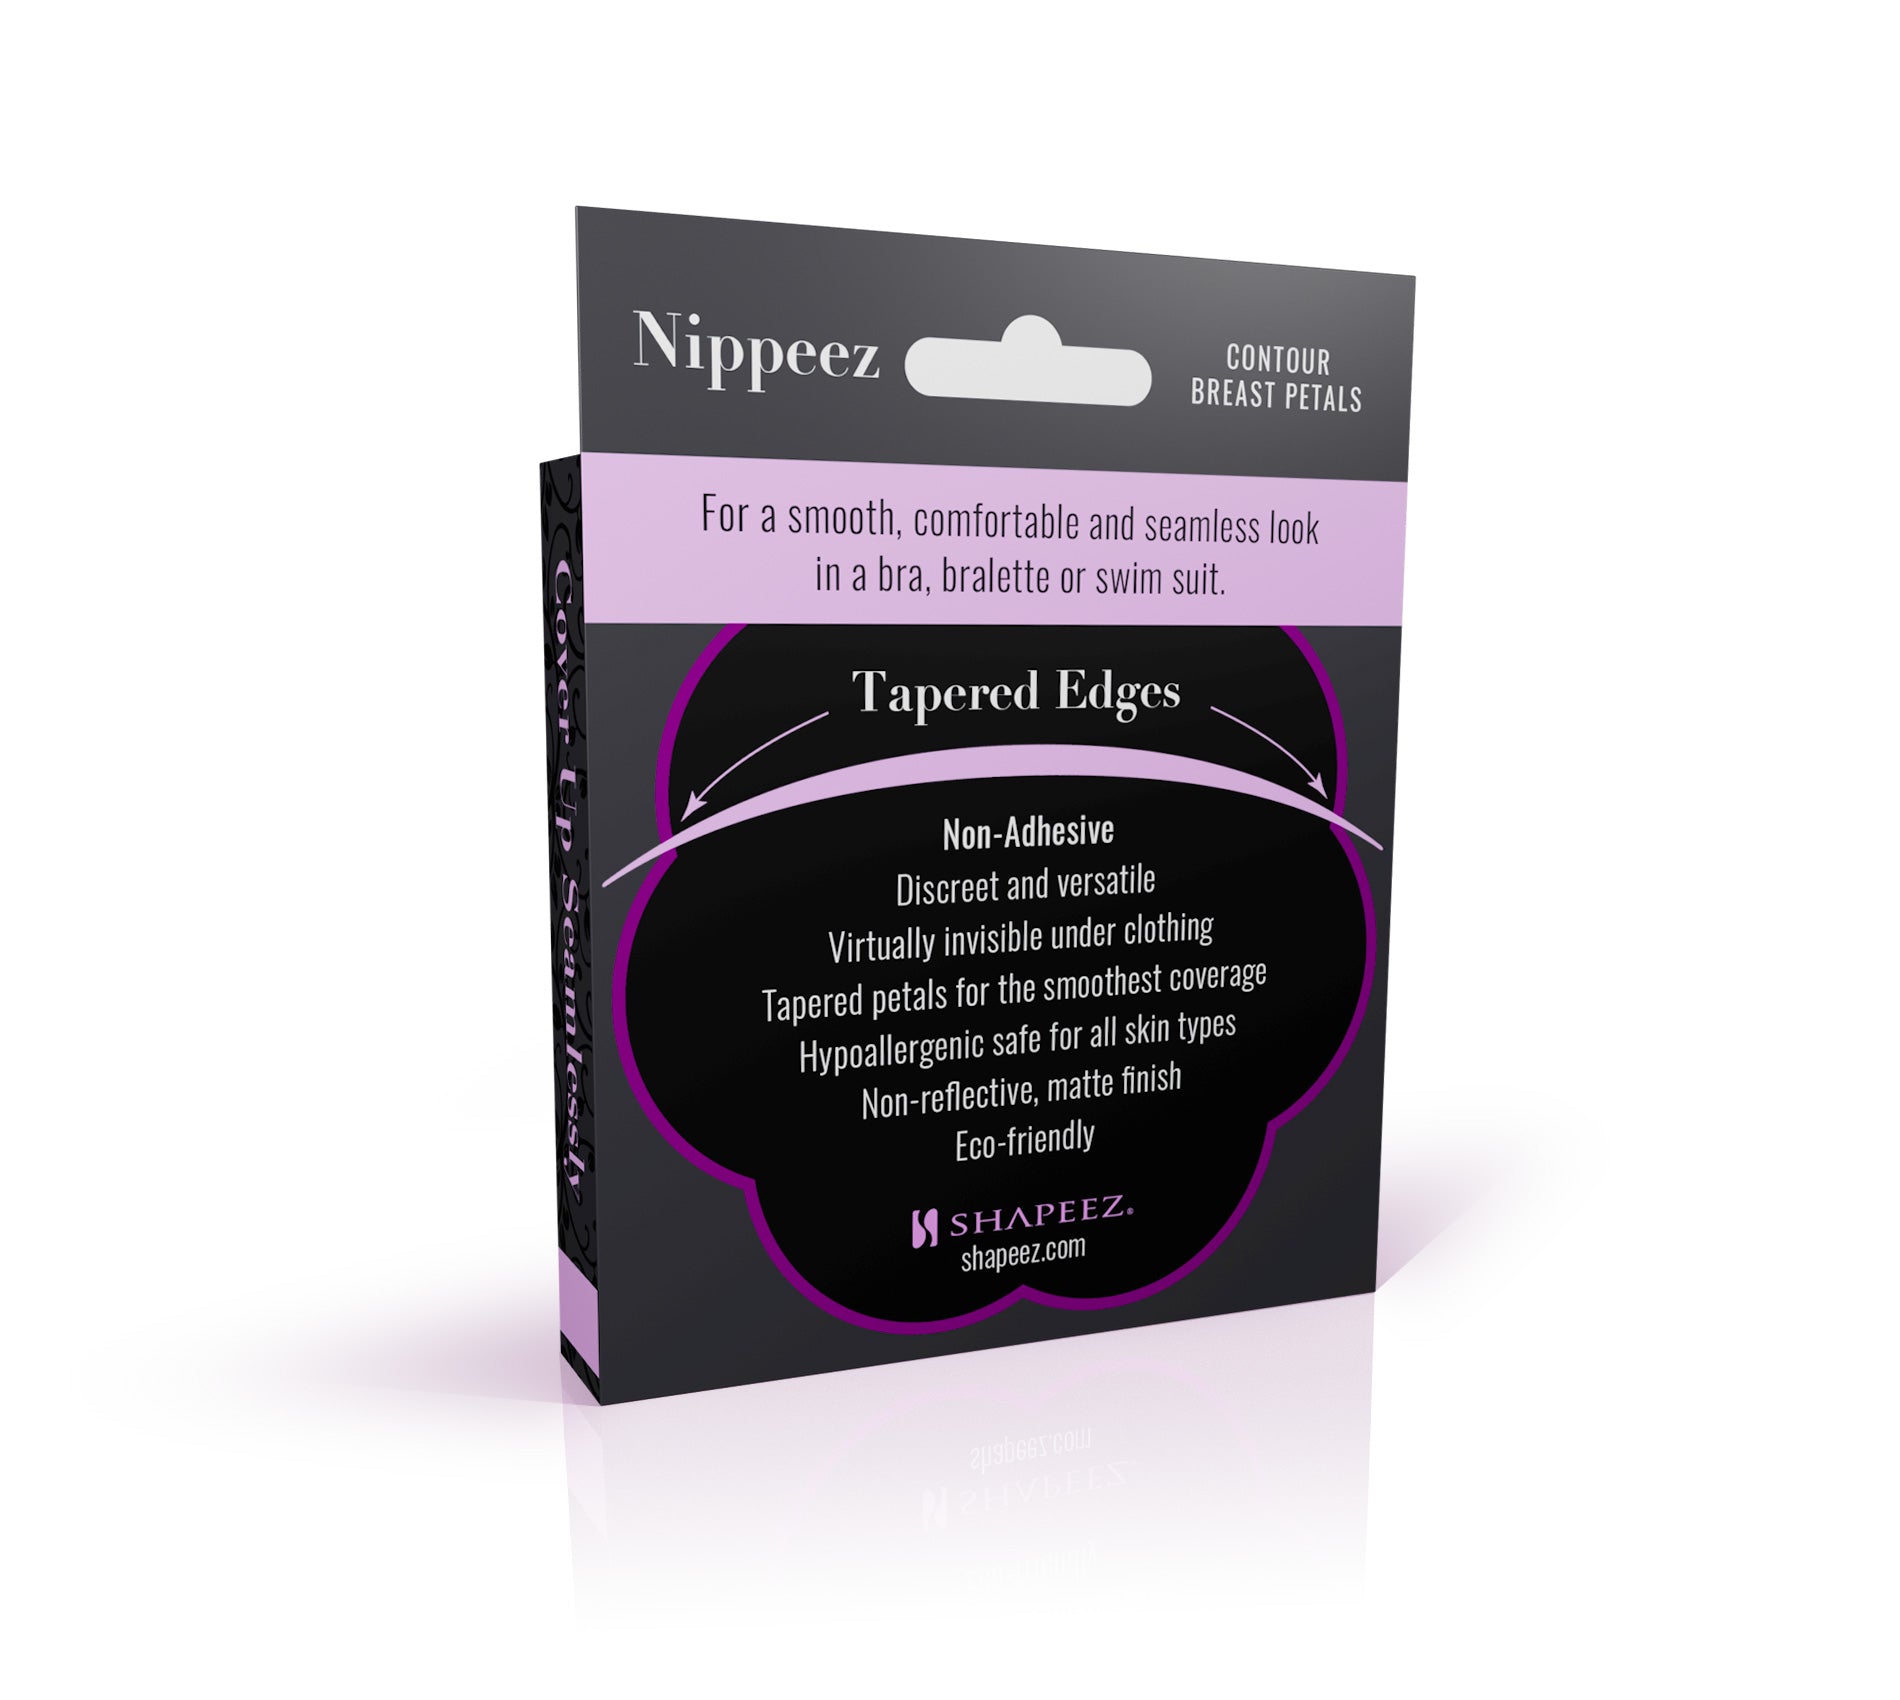 Adhesive Nipple Petal Covers